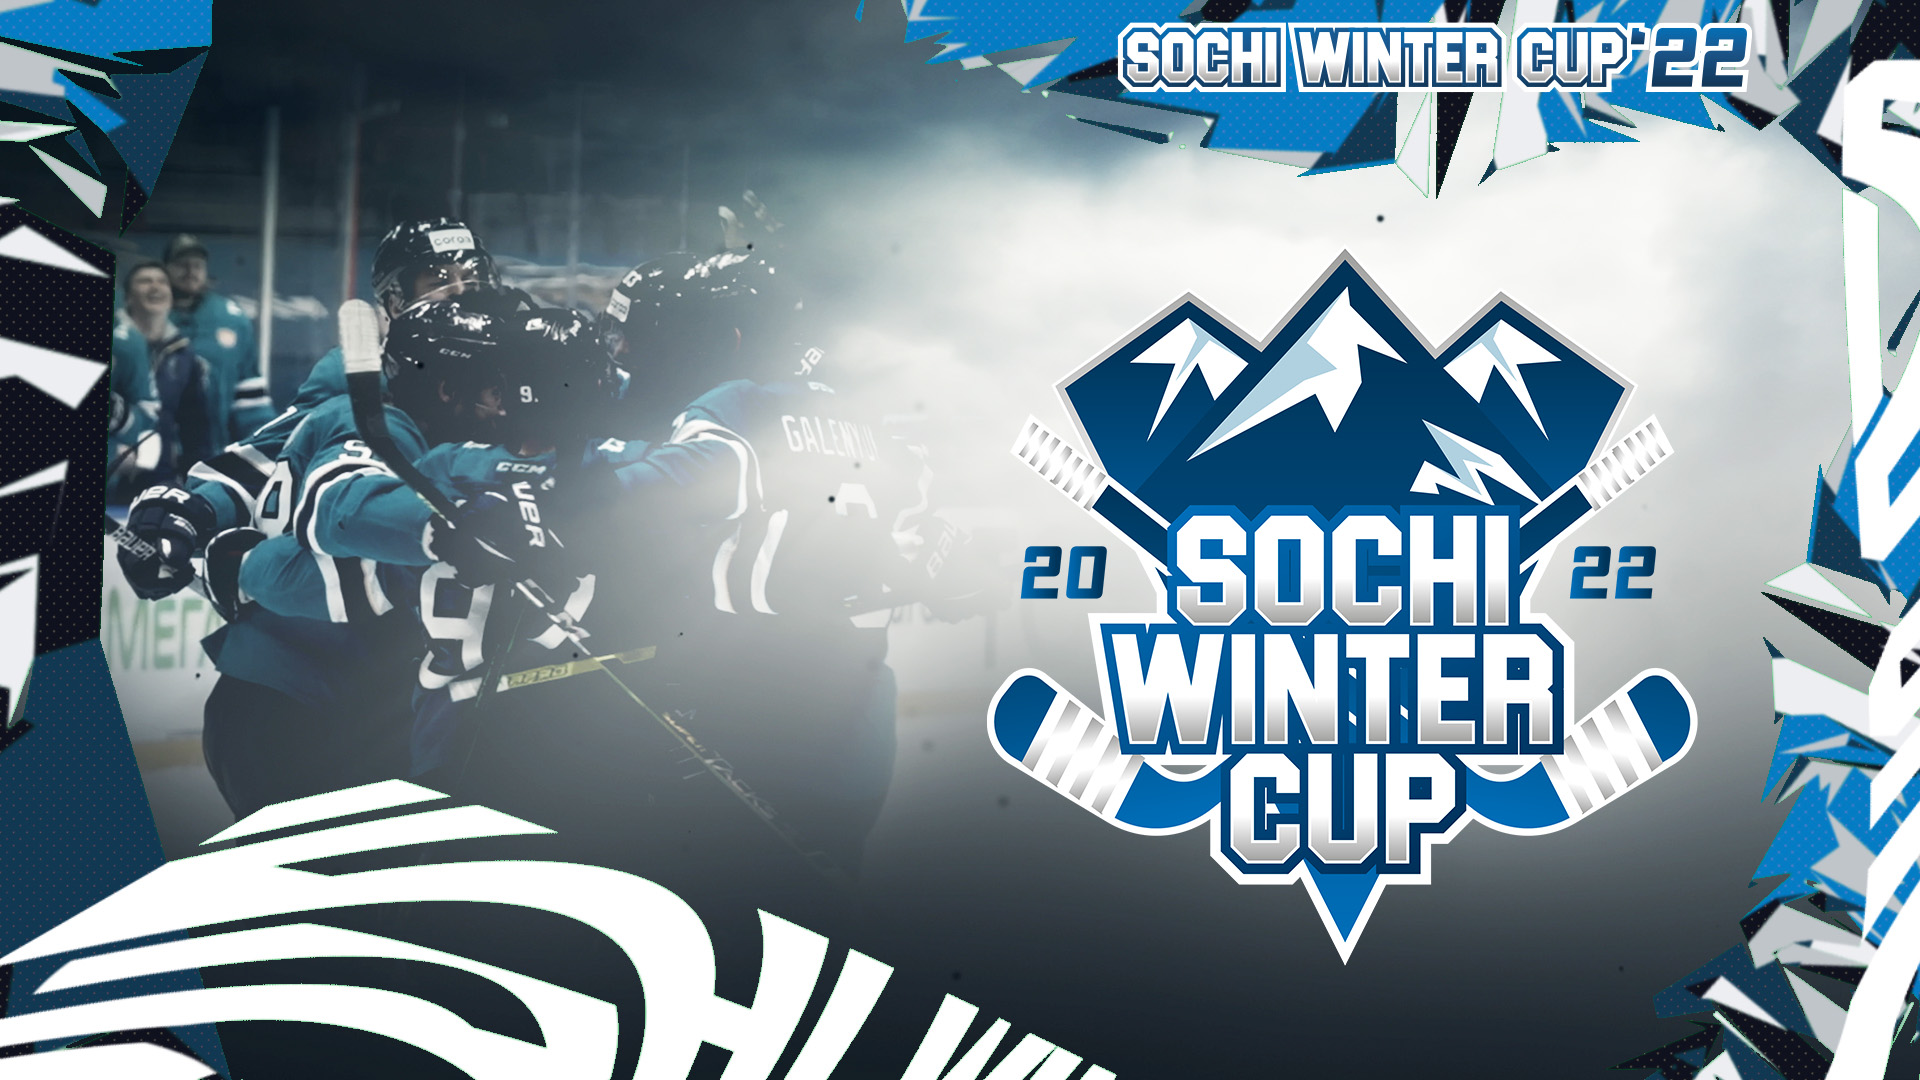 Sochi Winter Cup - 2022. Время хоккея